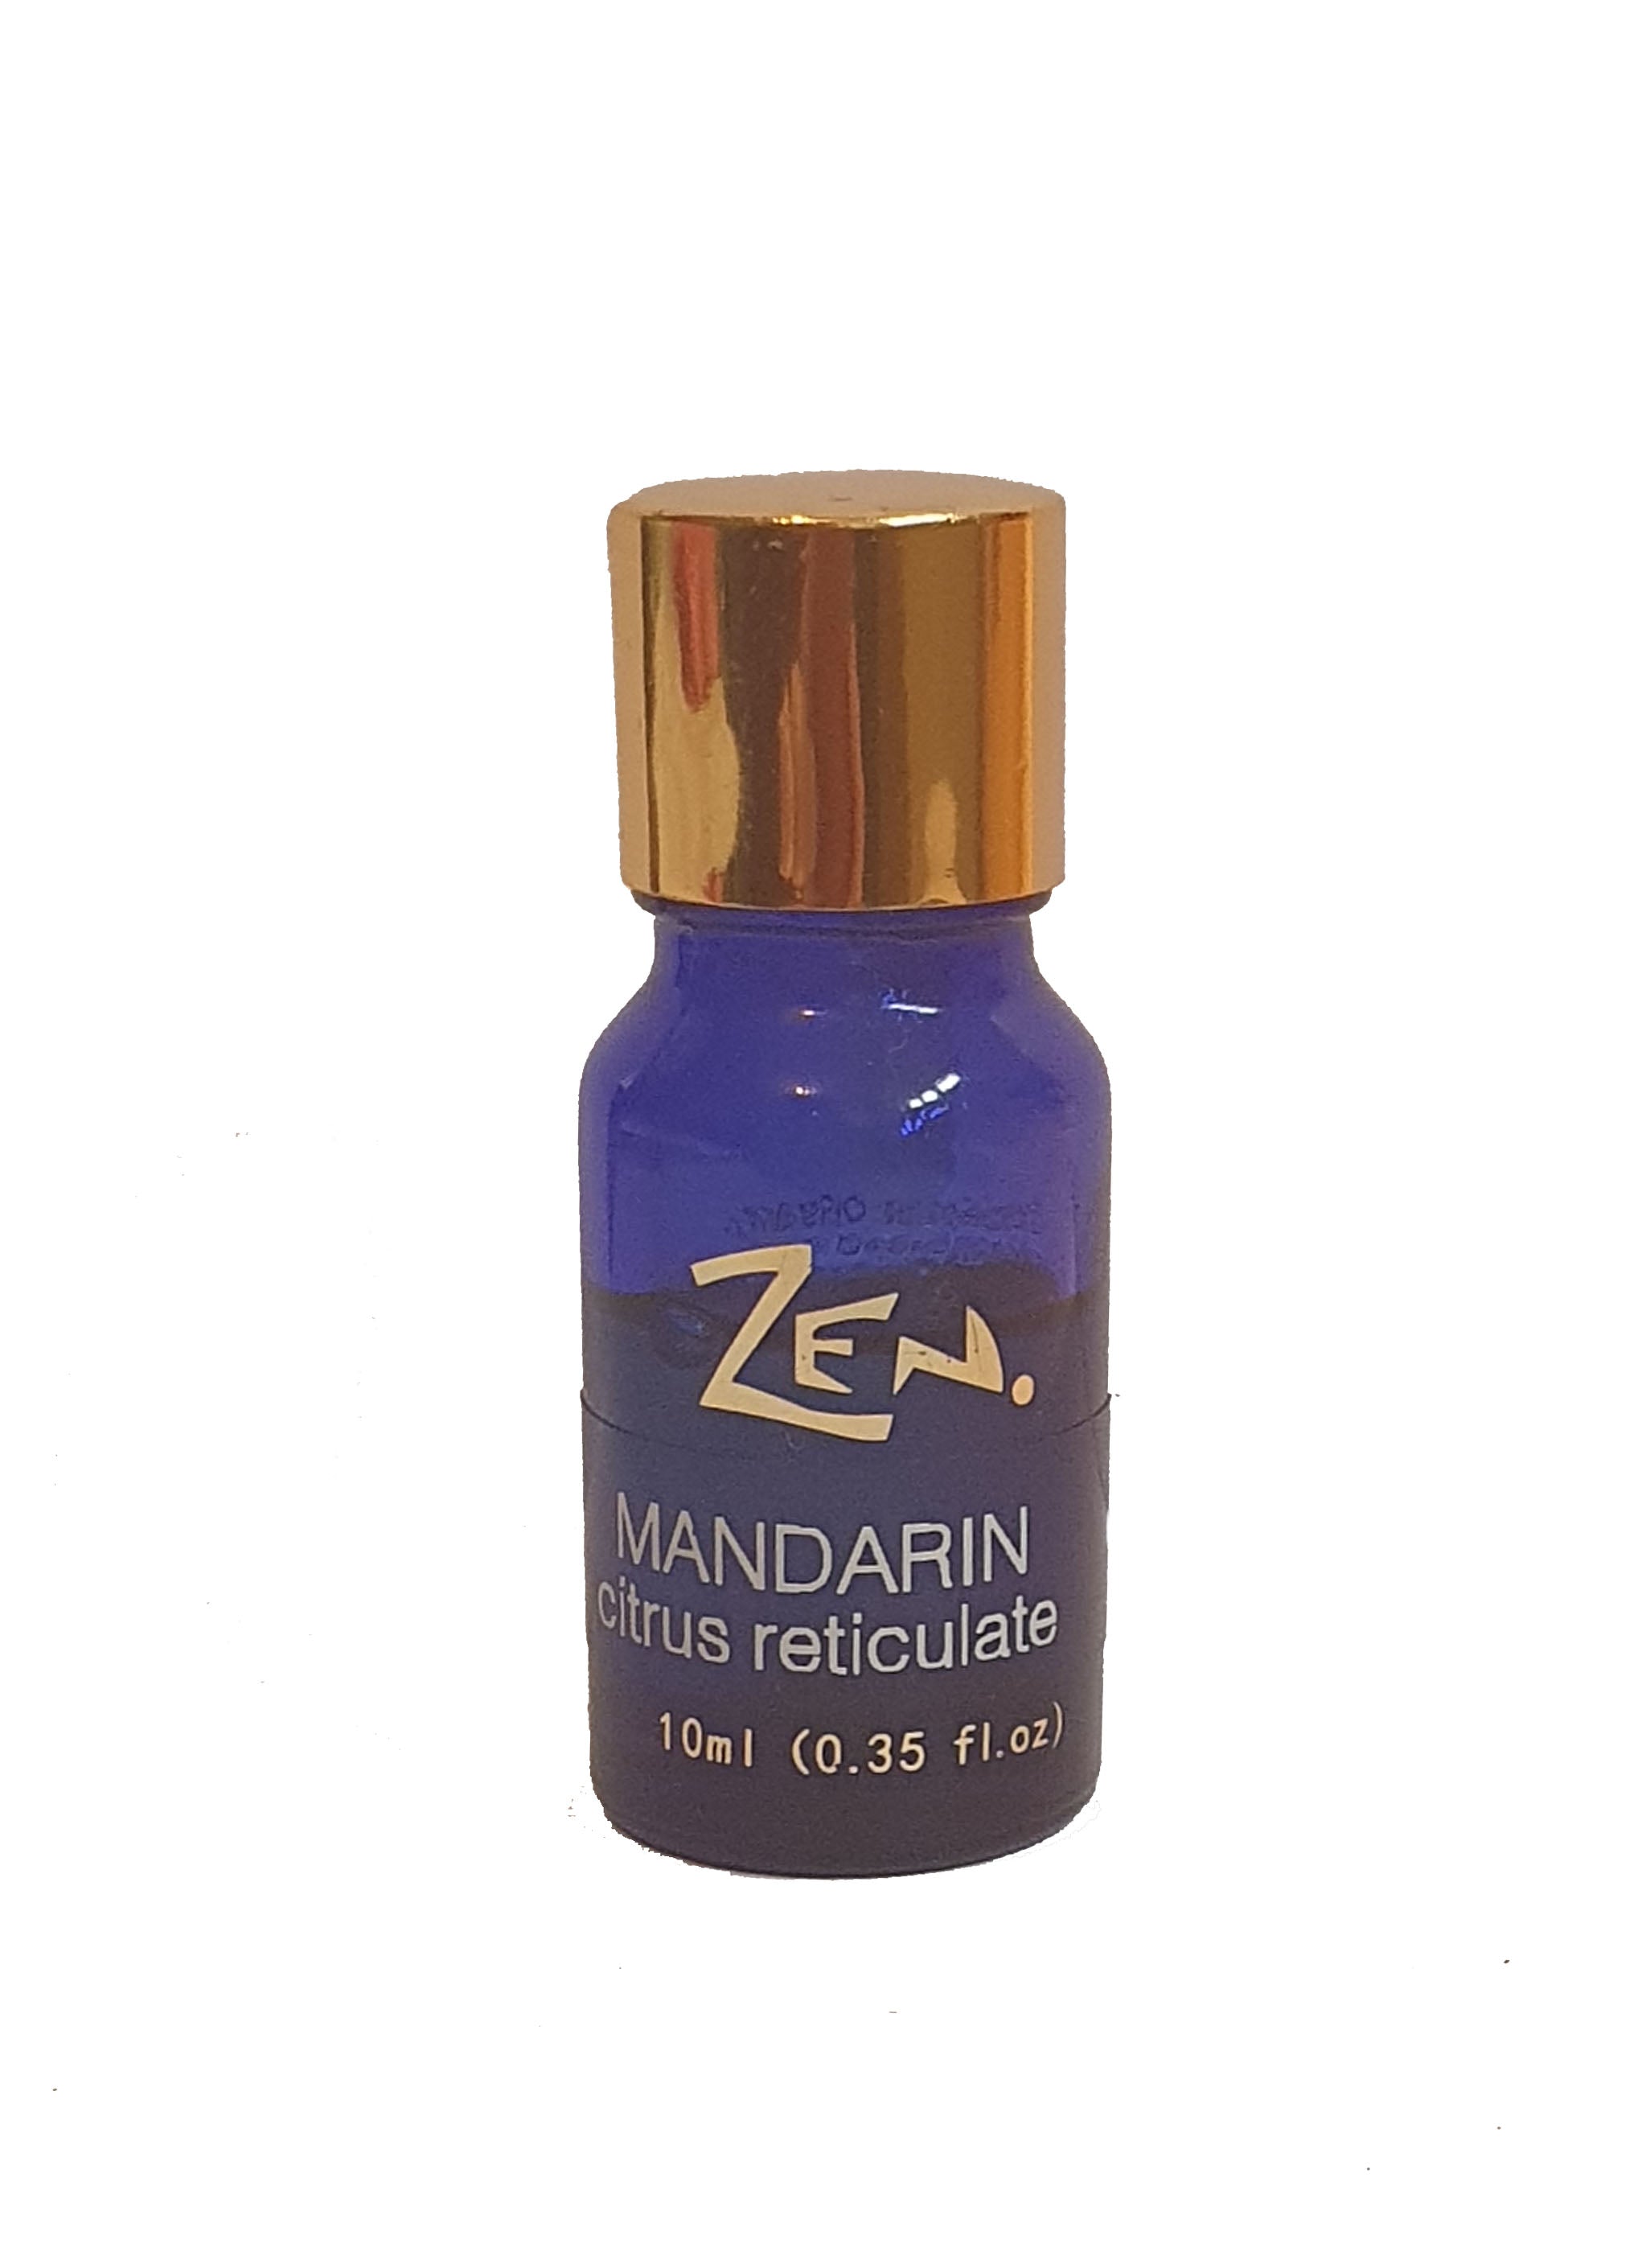 Mandarin Essential Oil - 10ml